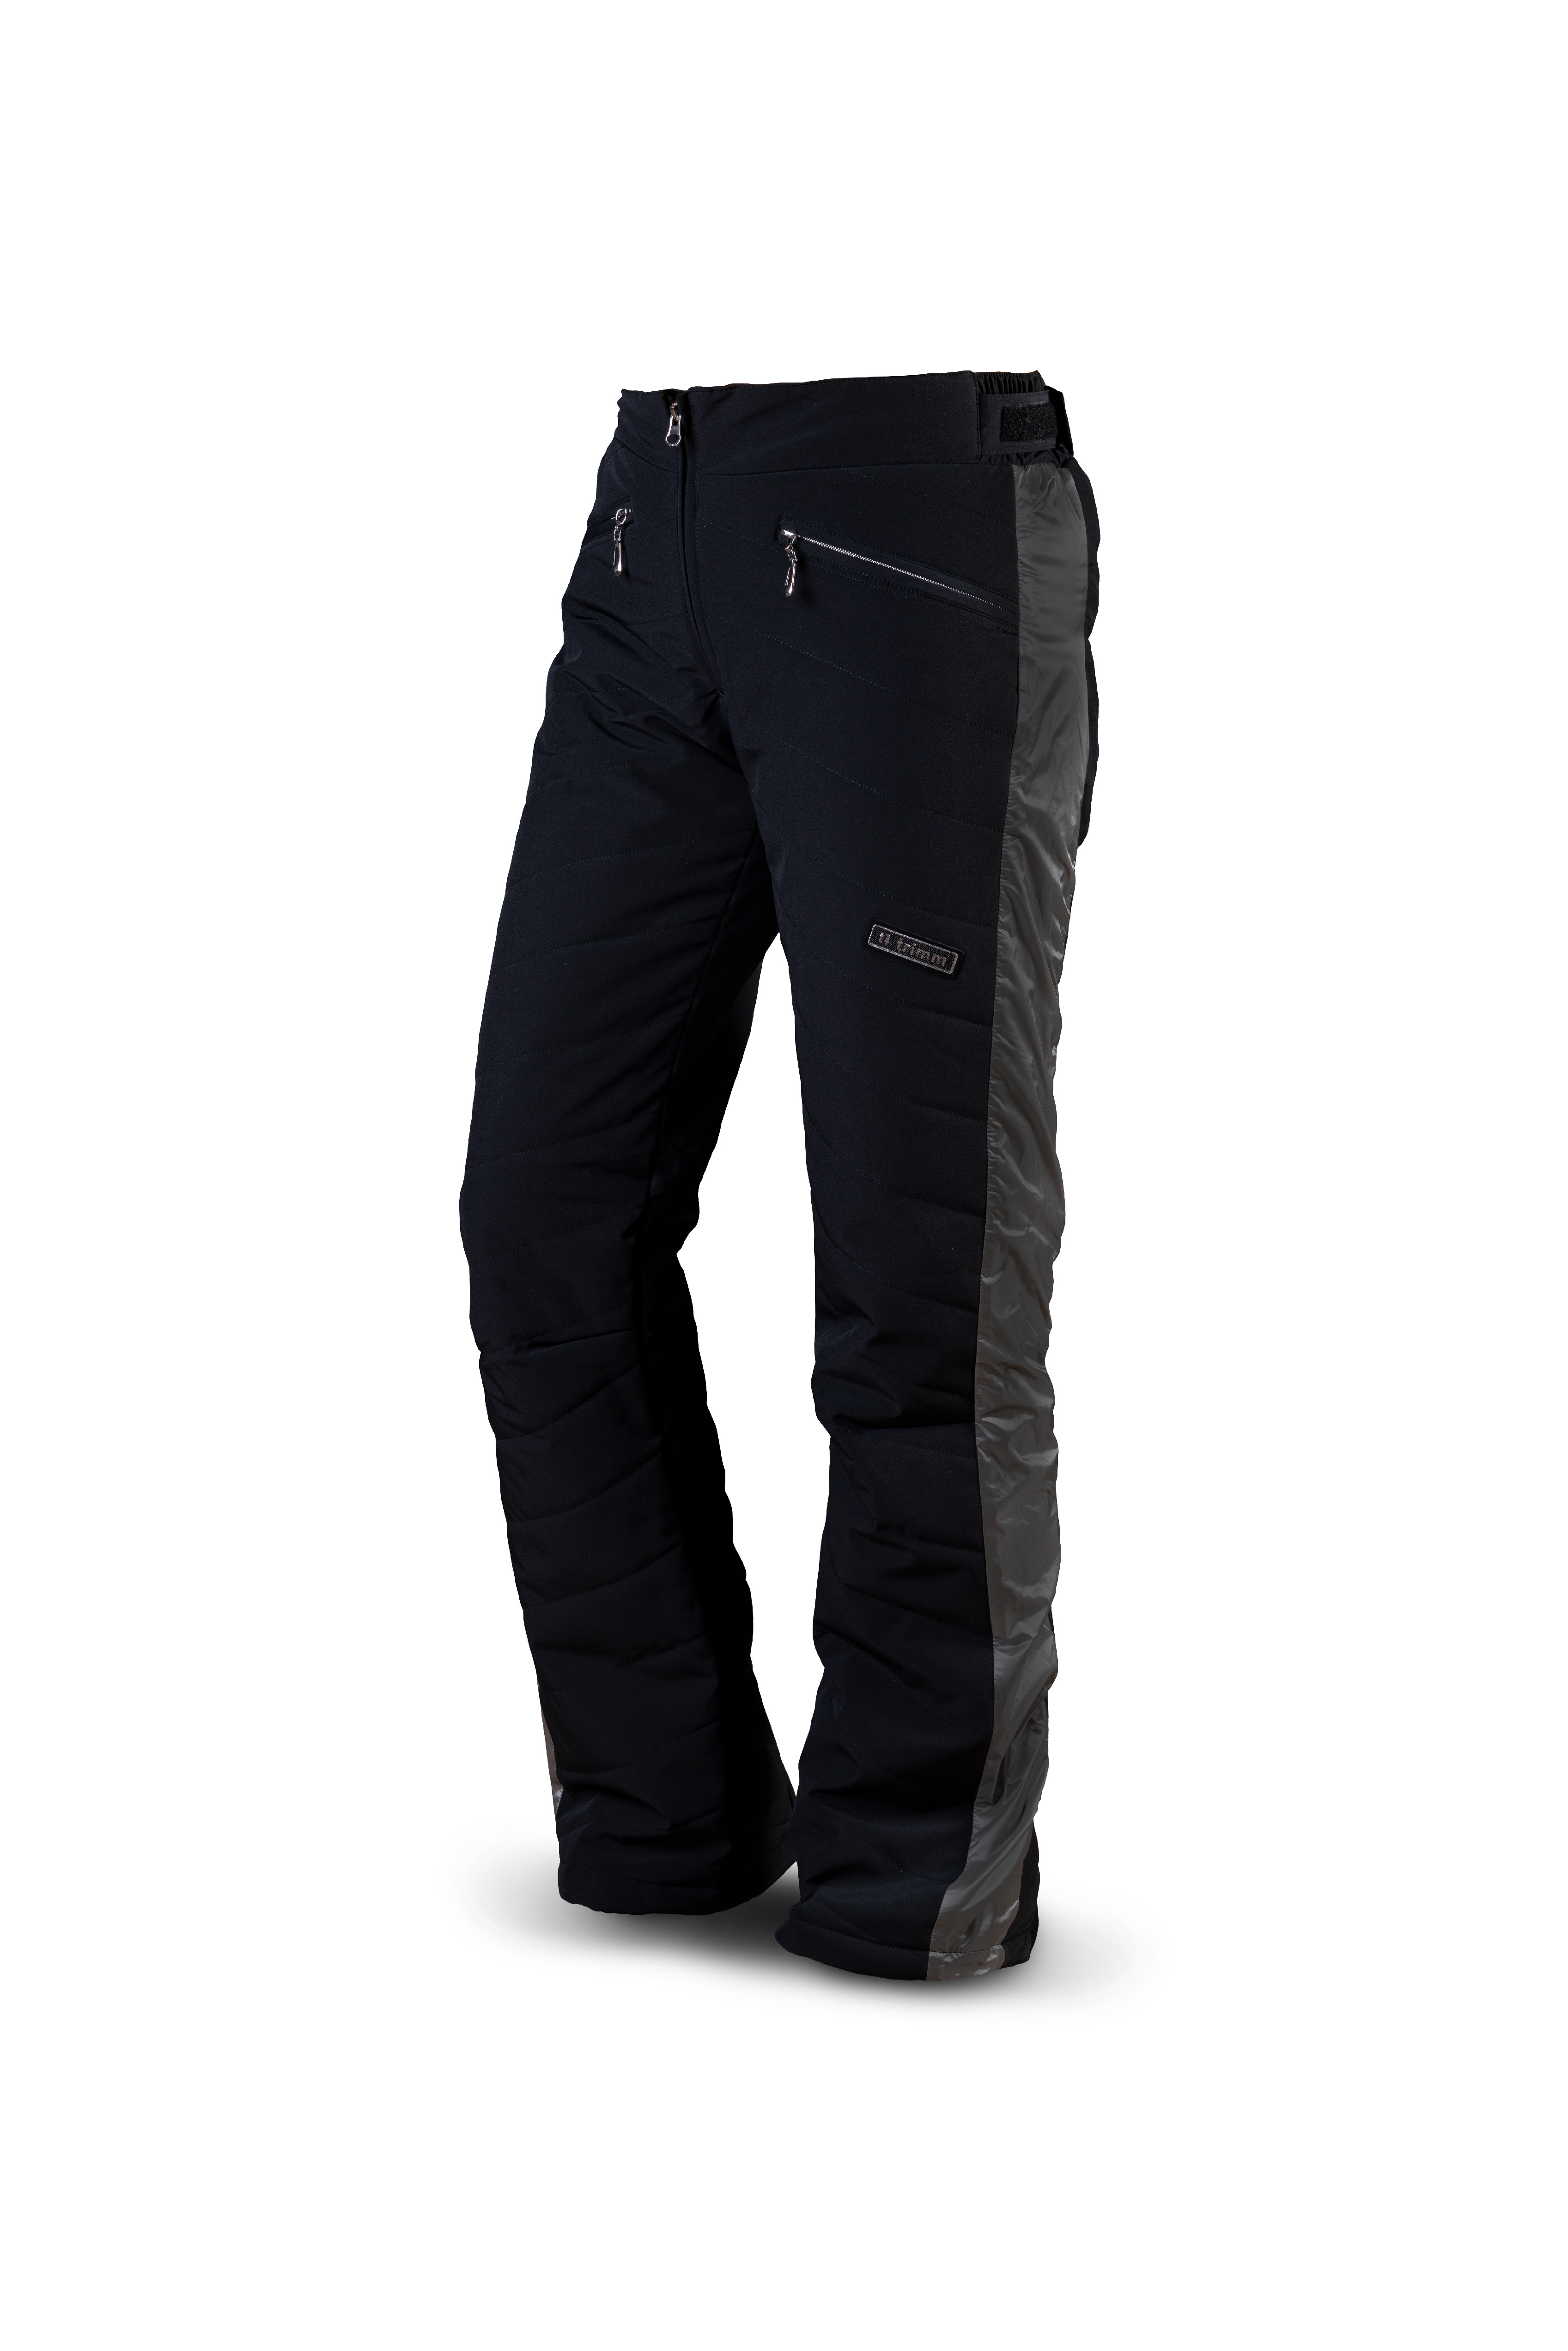 Trimm JUSTA PANTS black/ black Velikost: XL dámské kalhoty